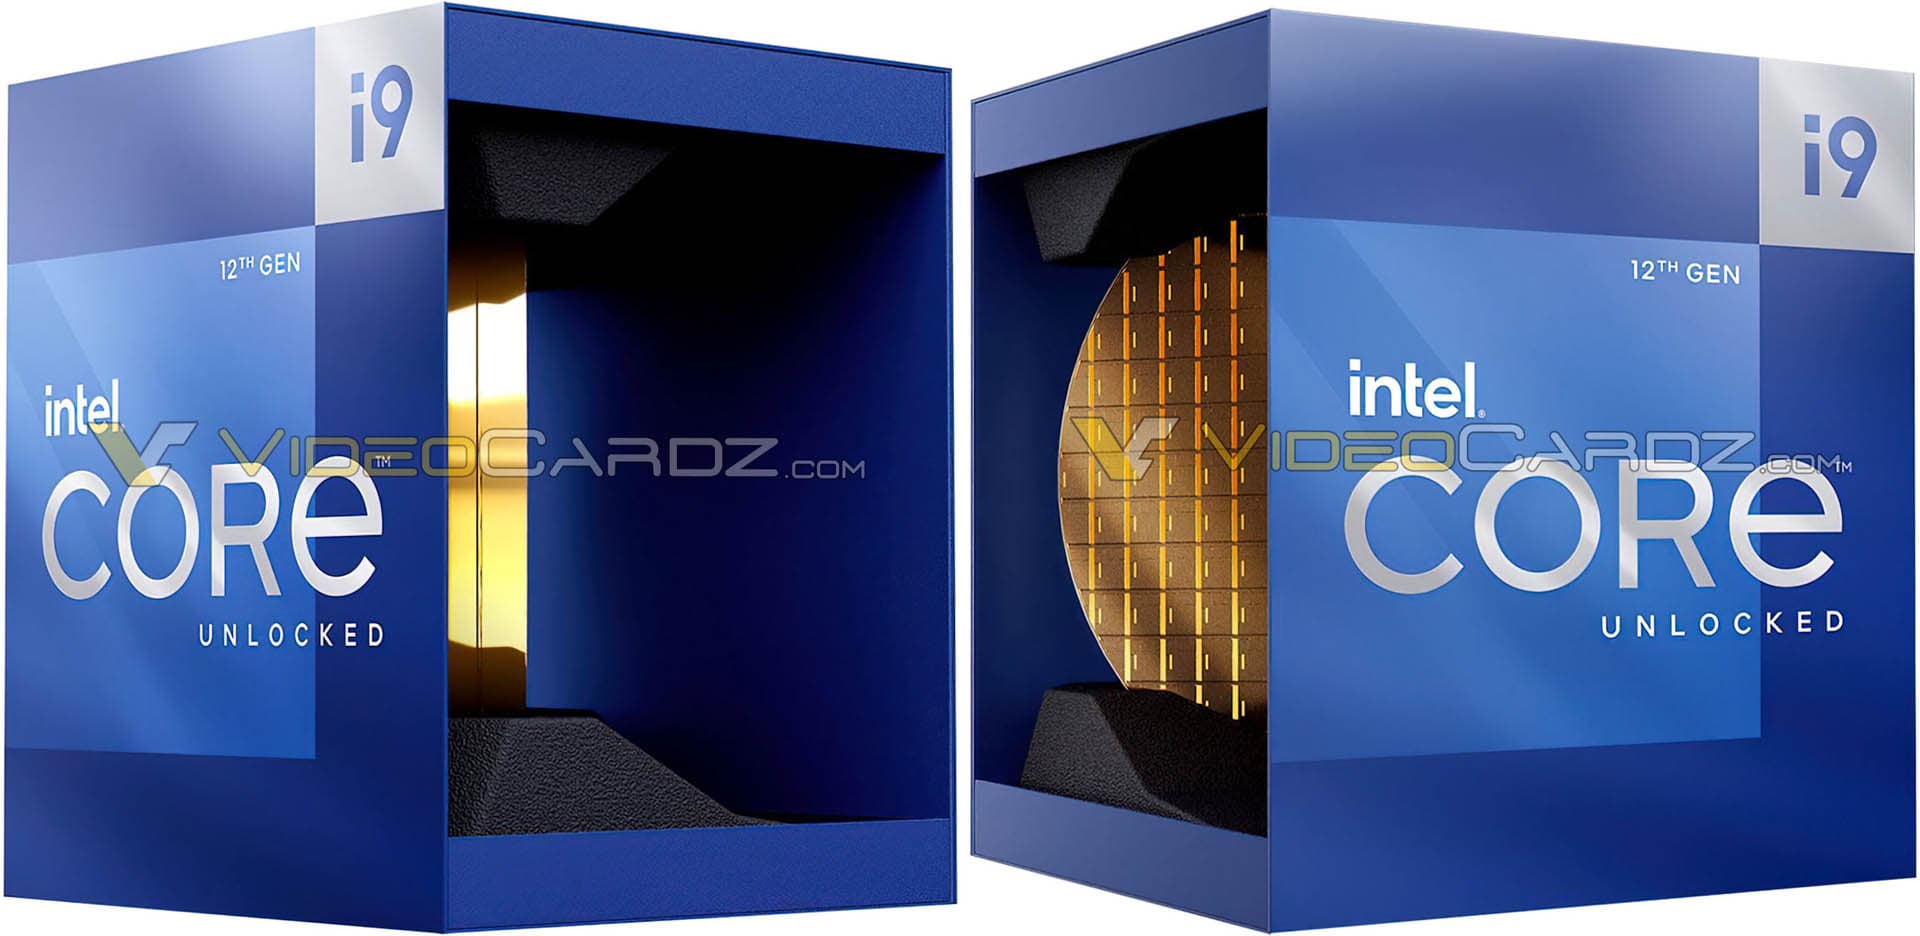 Intel Core i9-12900Kパッケージ